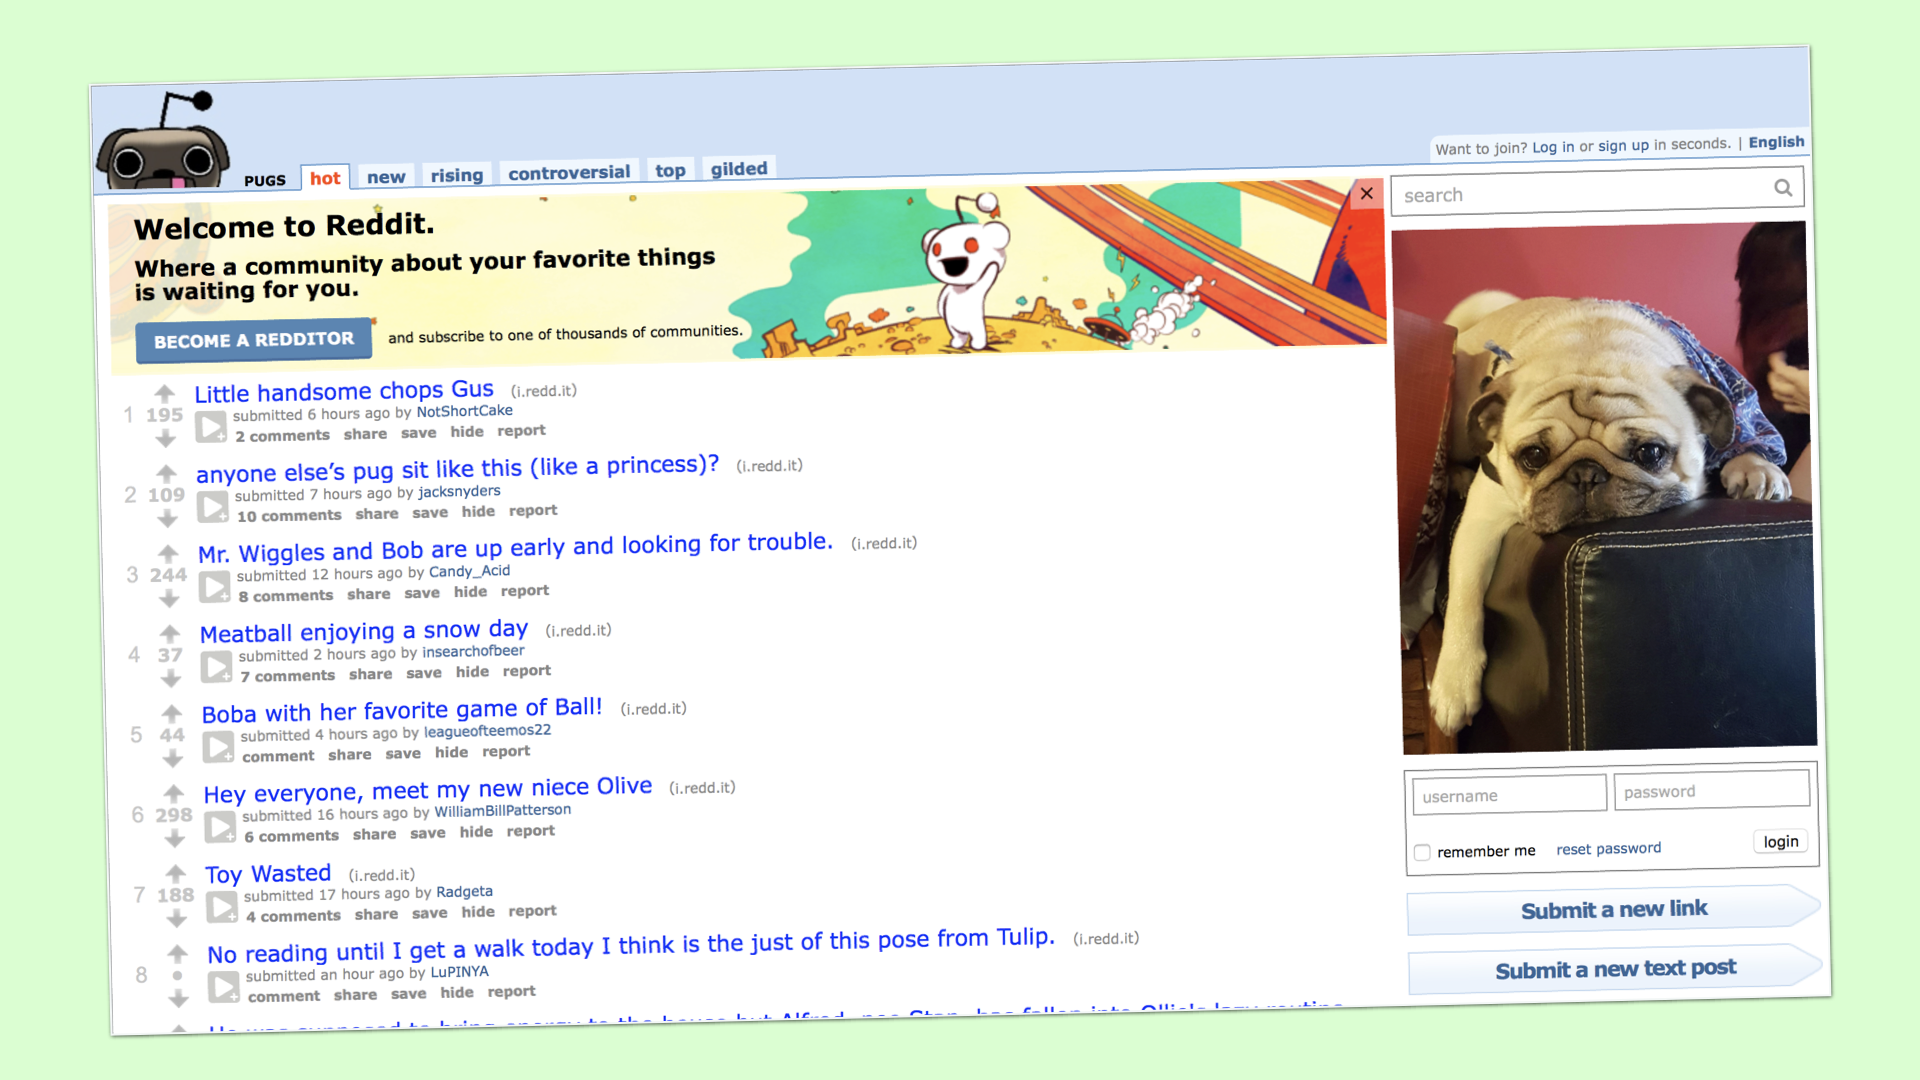 Landing page of Reddit's r/pugs community.